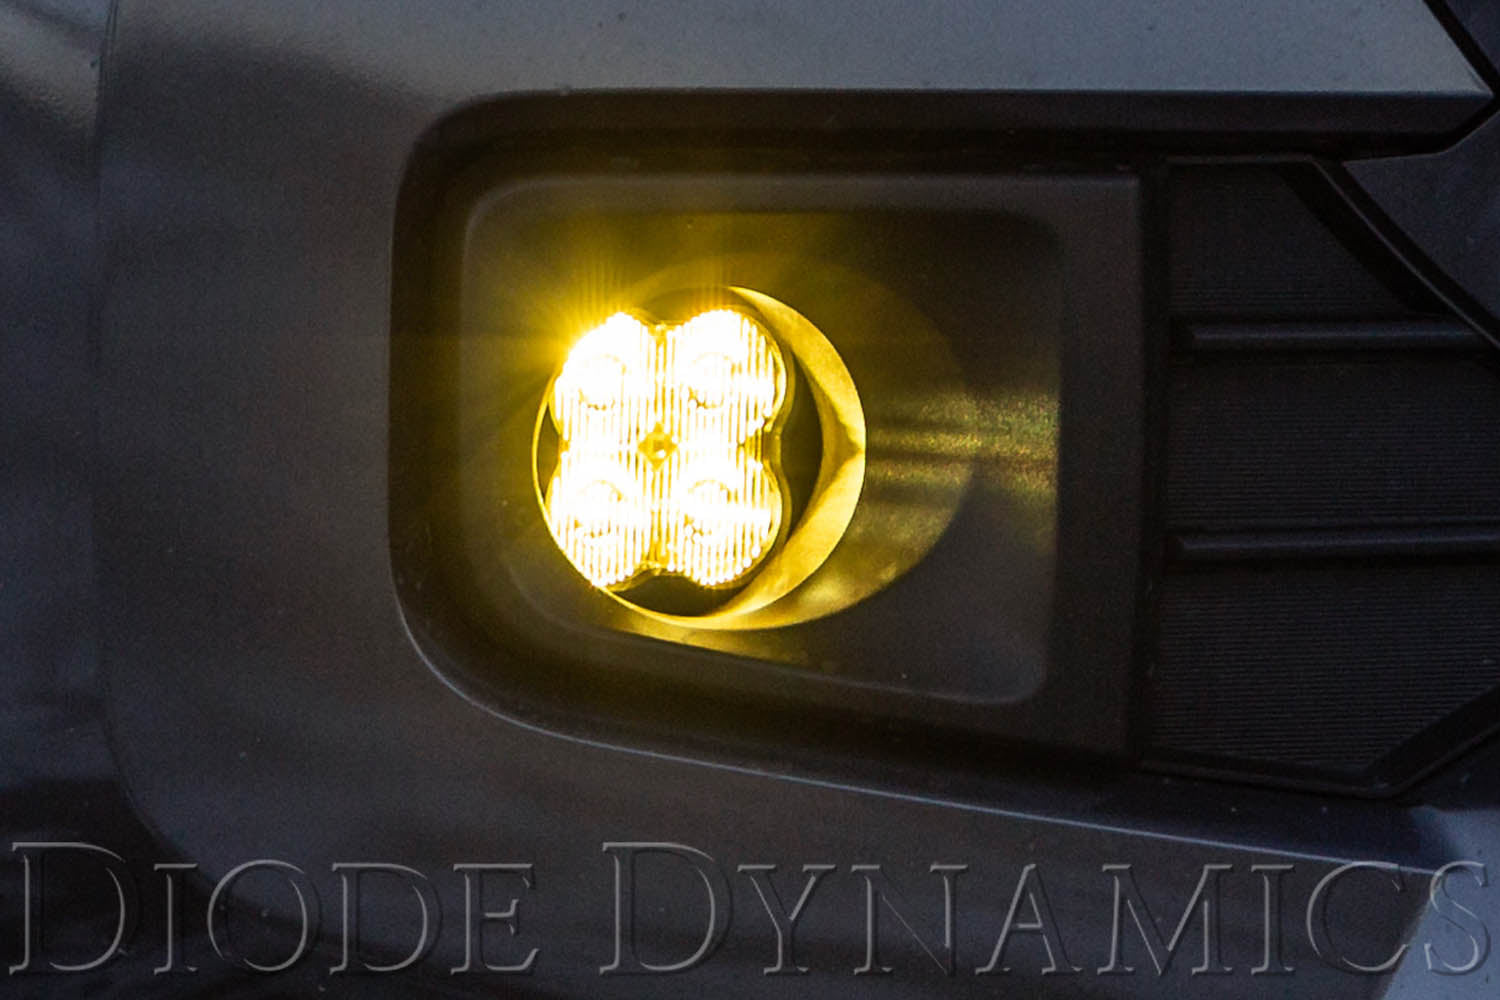 SS3 LED Fog Light Kit for 2015-2017 Subaru Legacy, White SAE Fog Pro